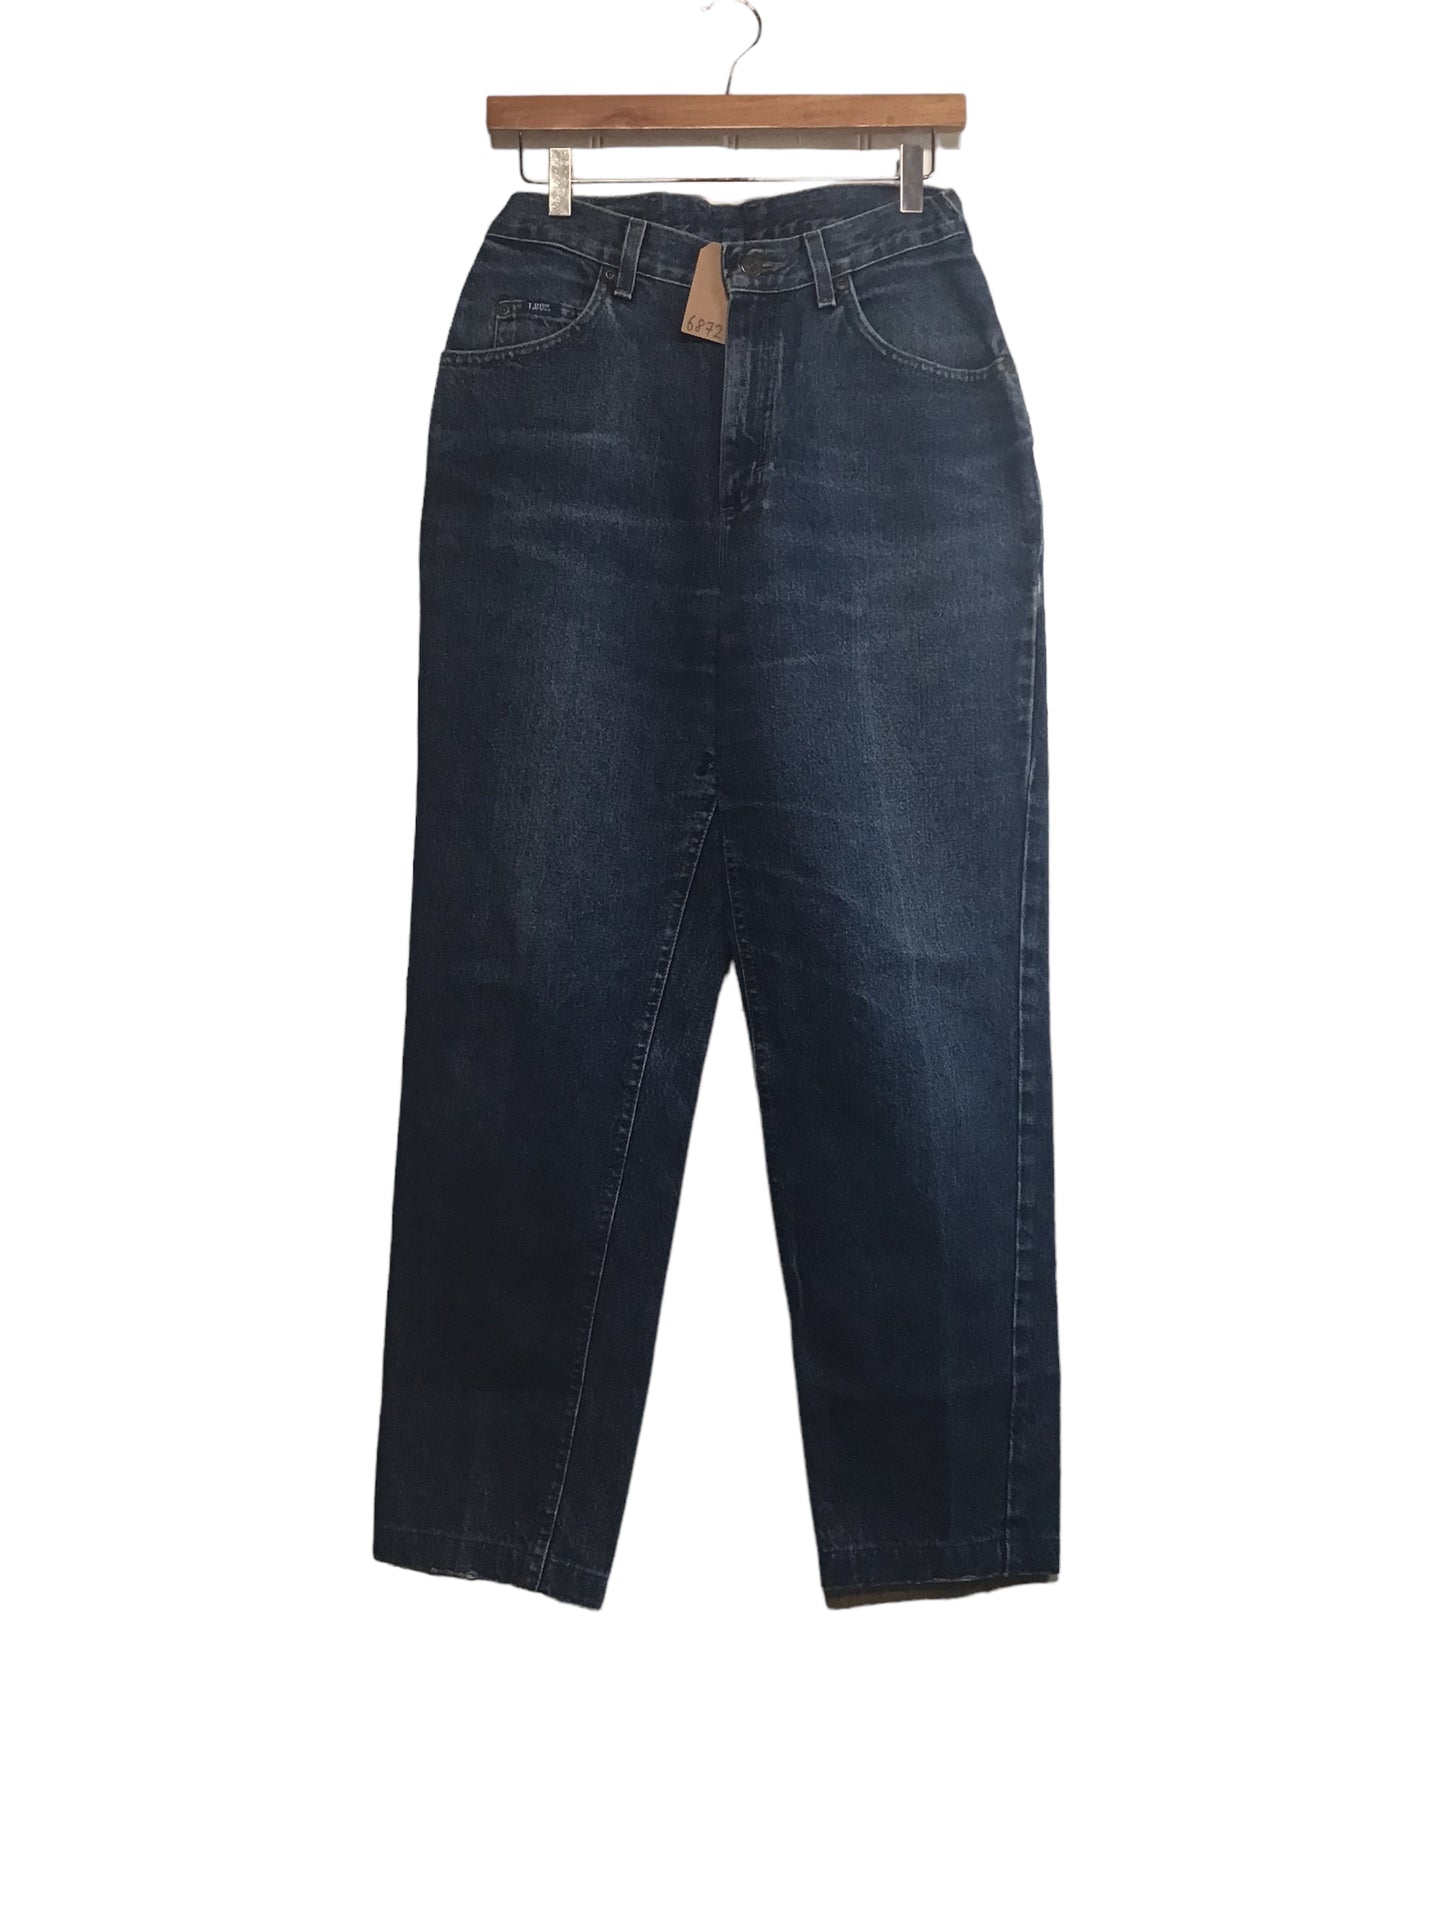 High Waisted Lee Jeans (28x30)